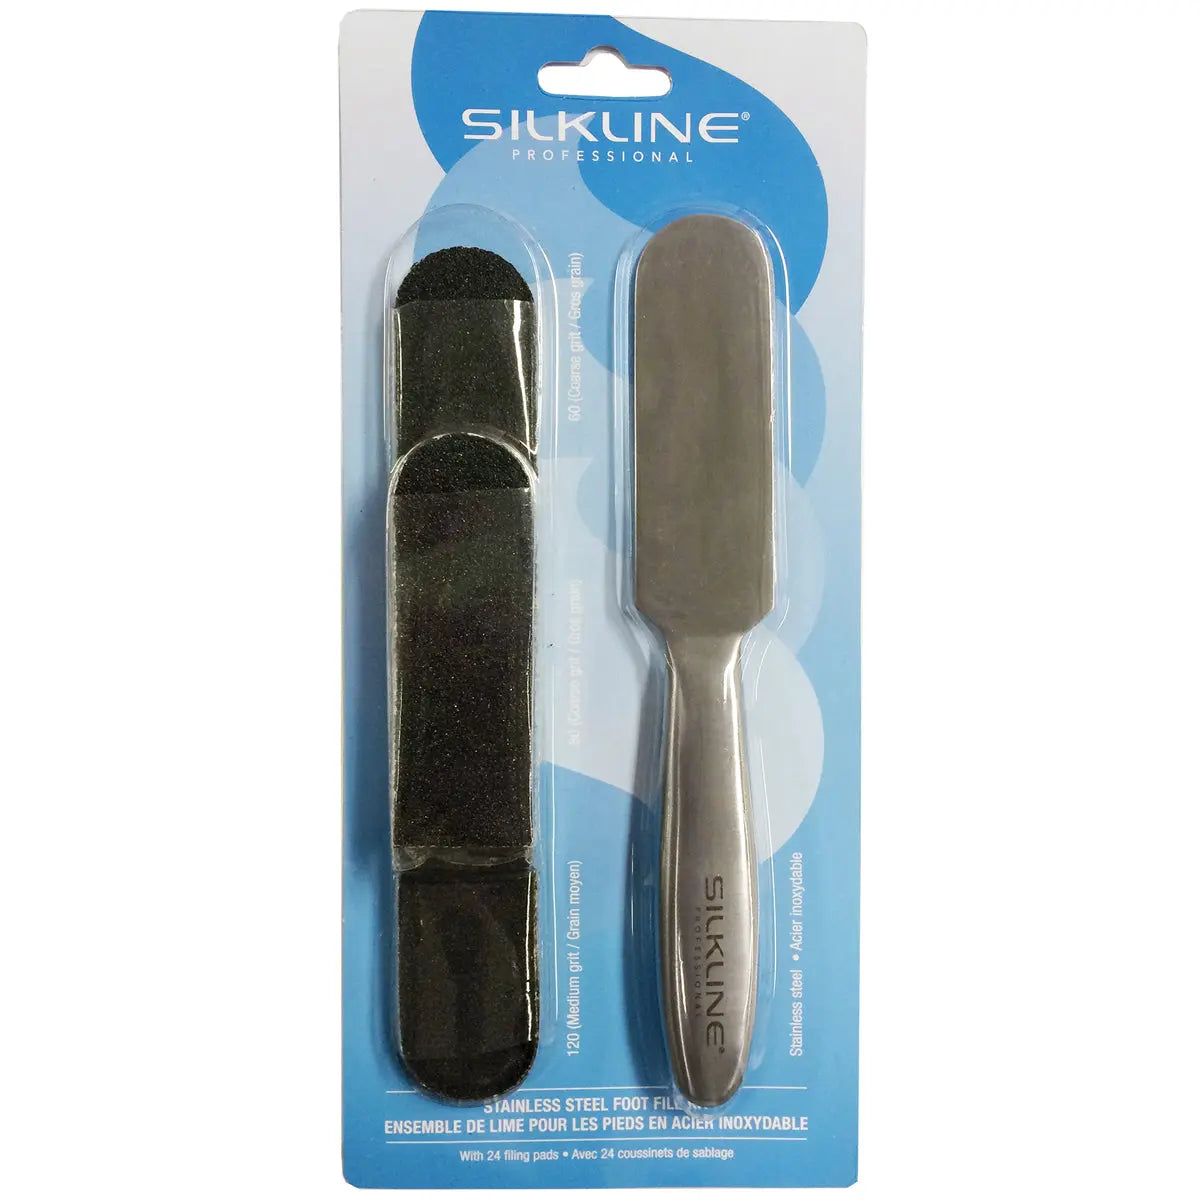 SilkLine Stainless Steel Foot File Kit #SLSSFF4000KITC Silkline